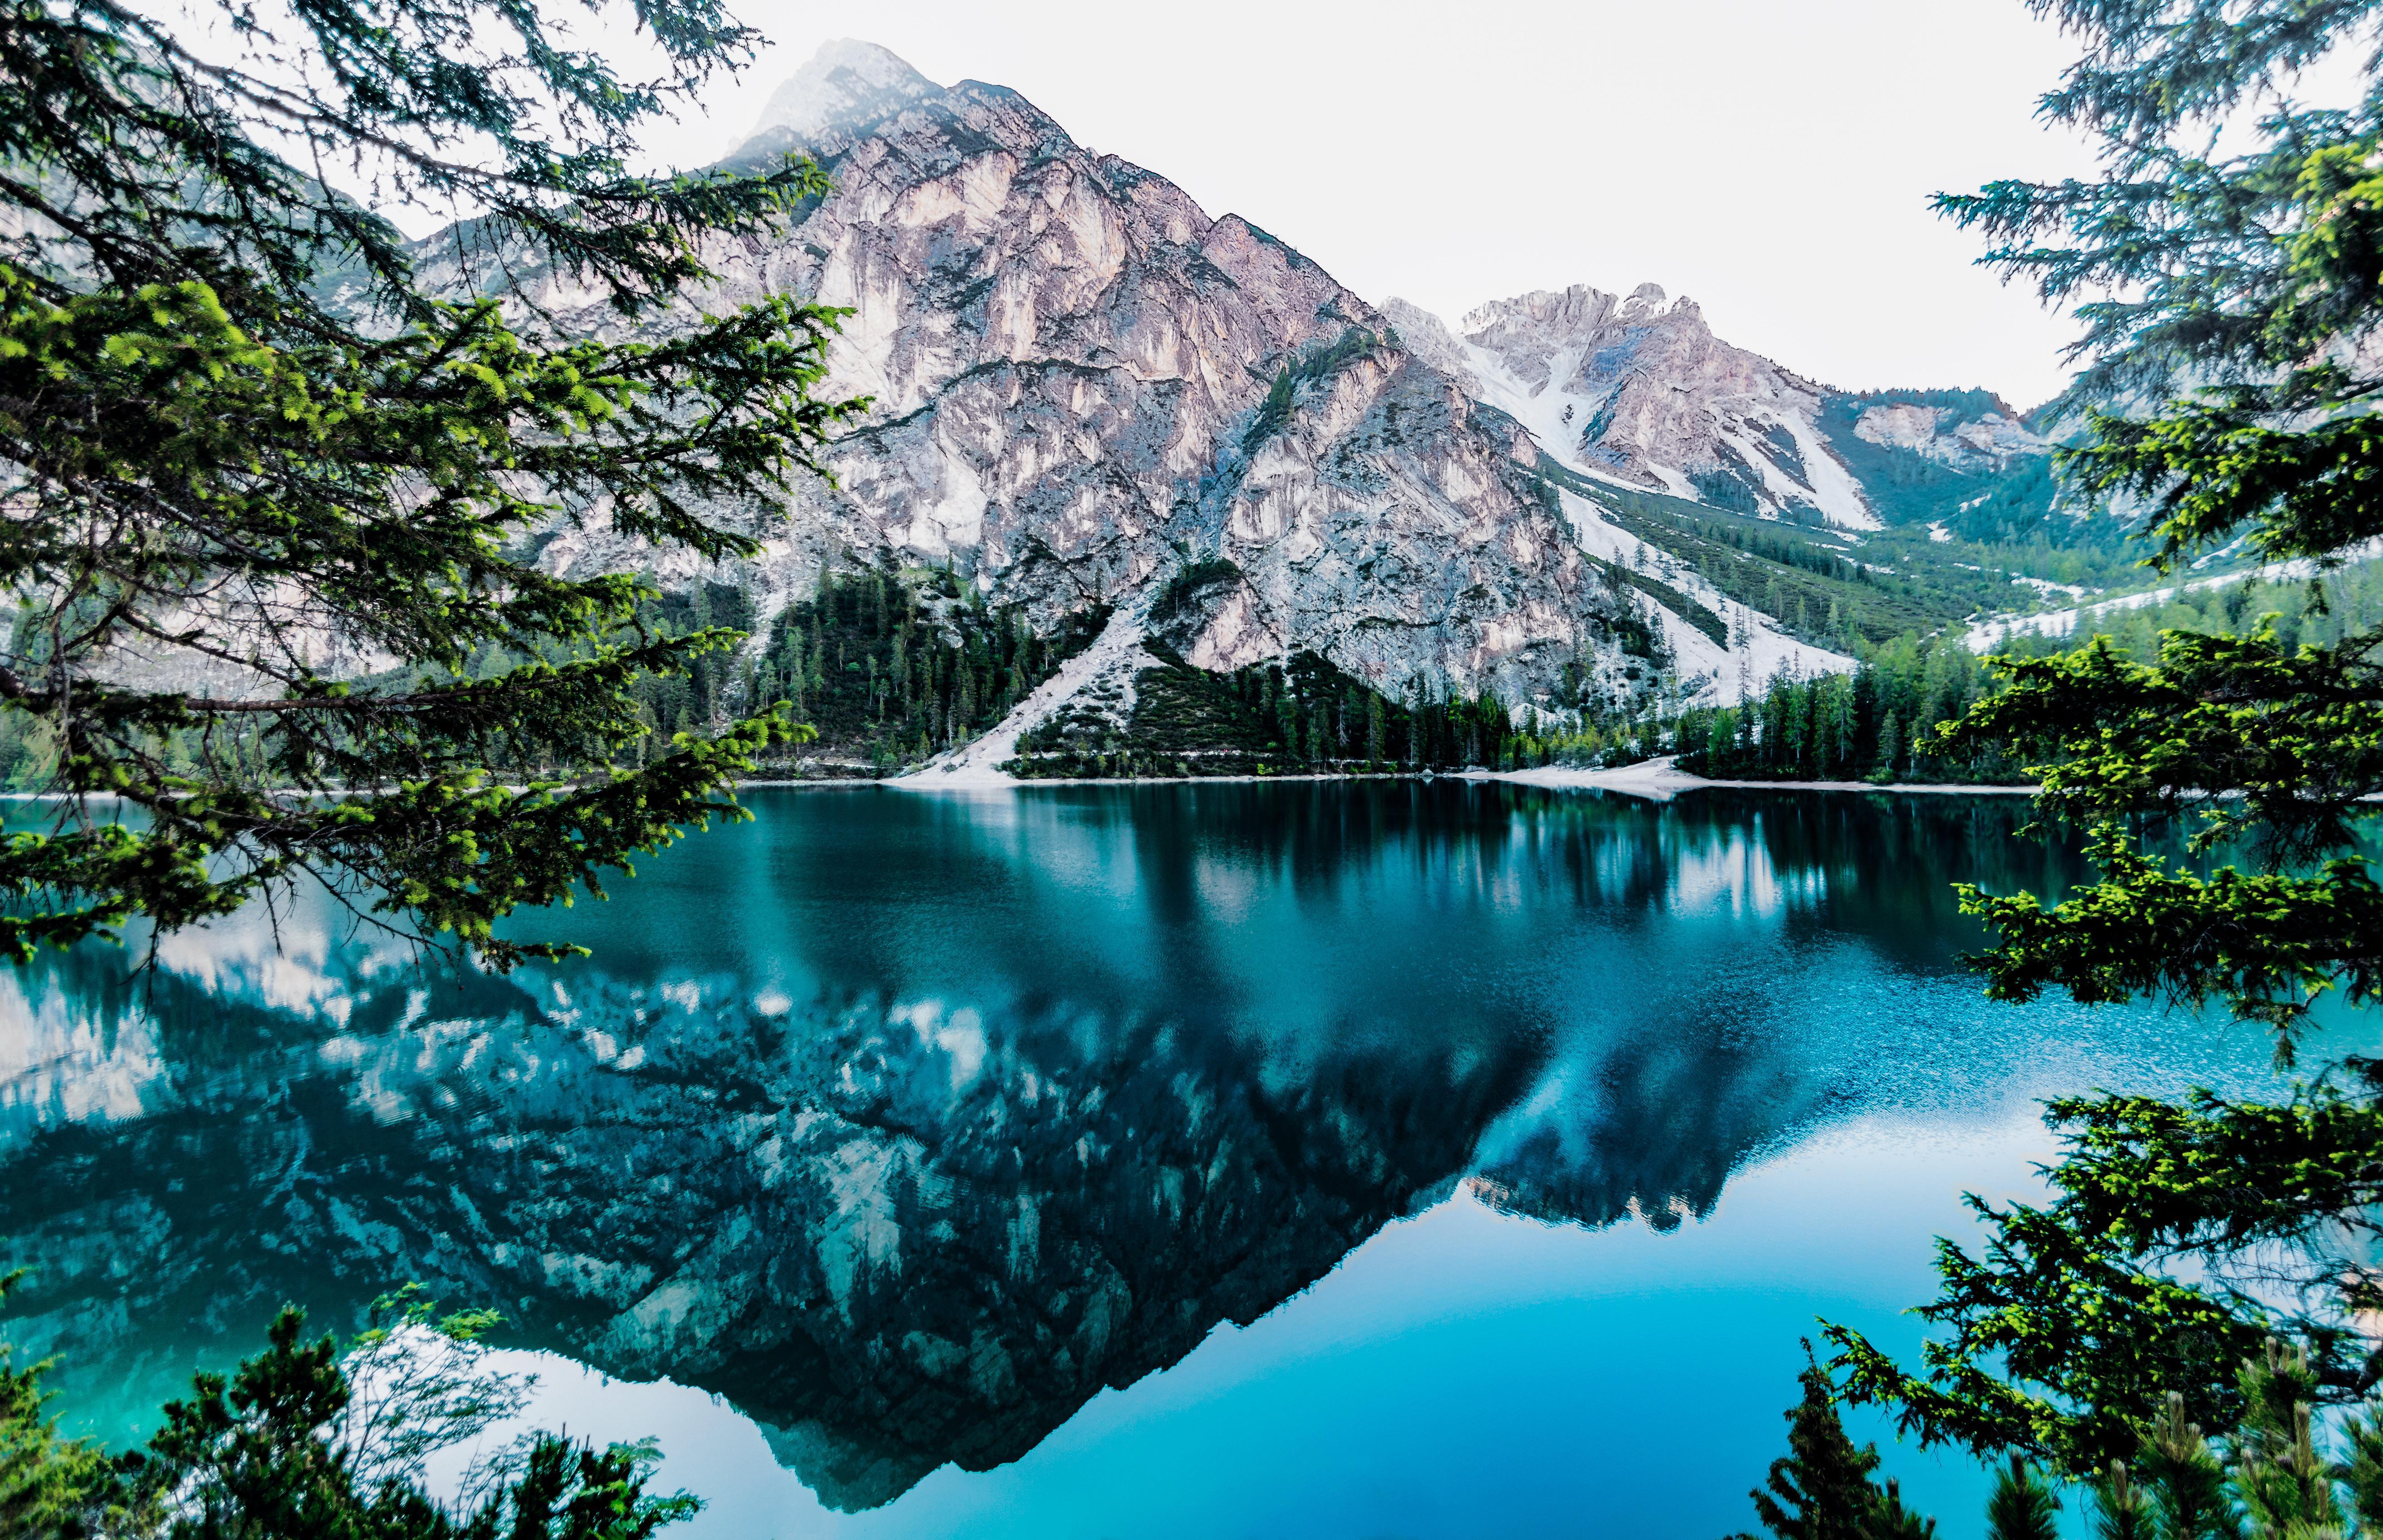 Download 5266x3403 nature, mountains, lake, reflection